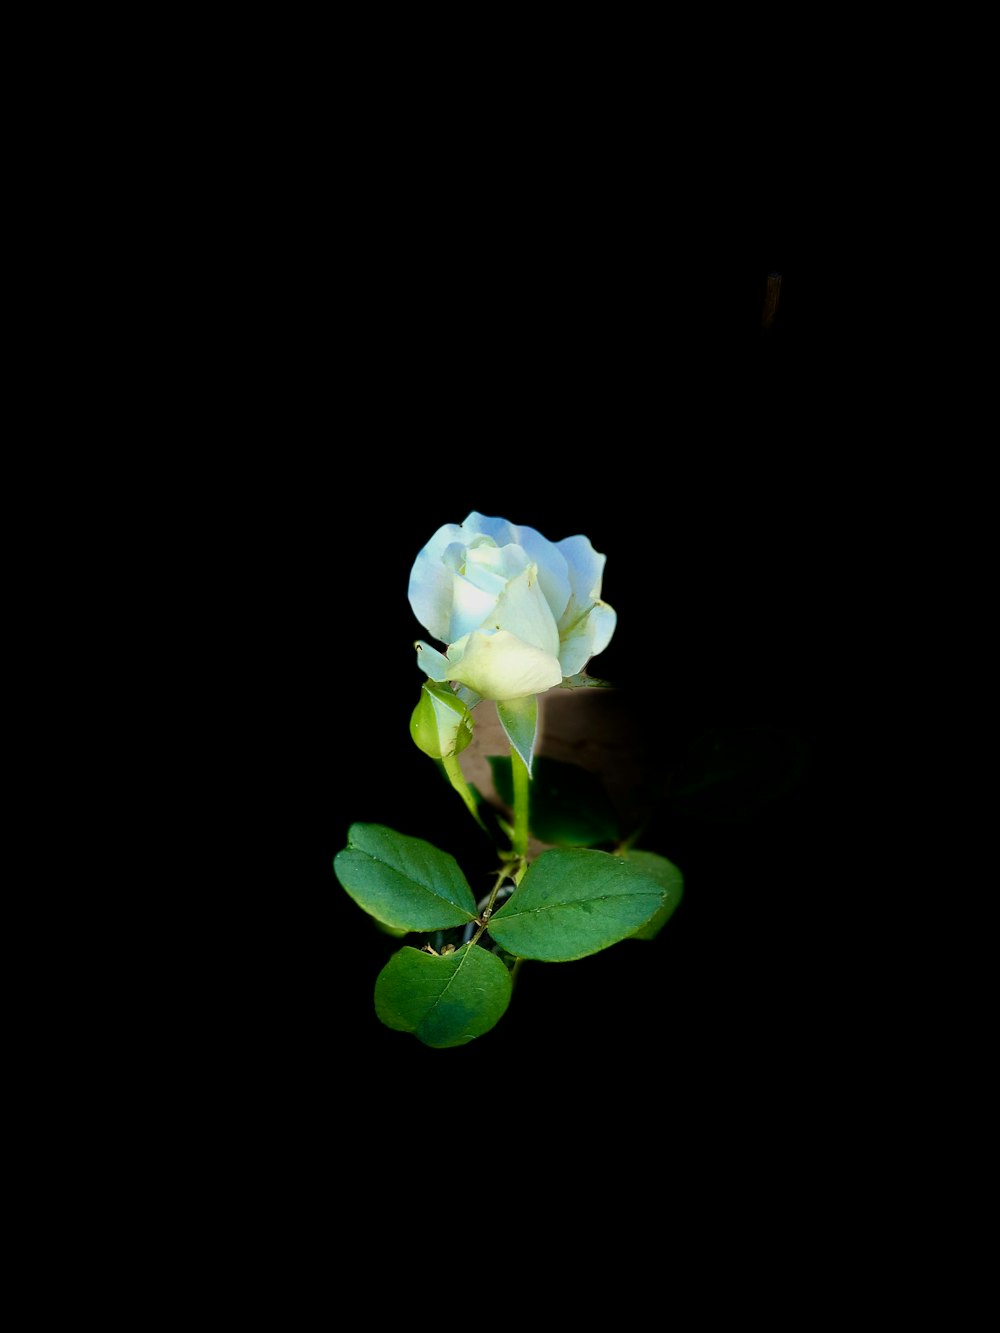 blooming white rose flower